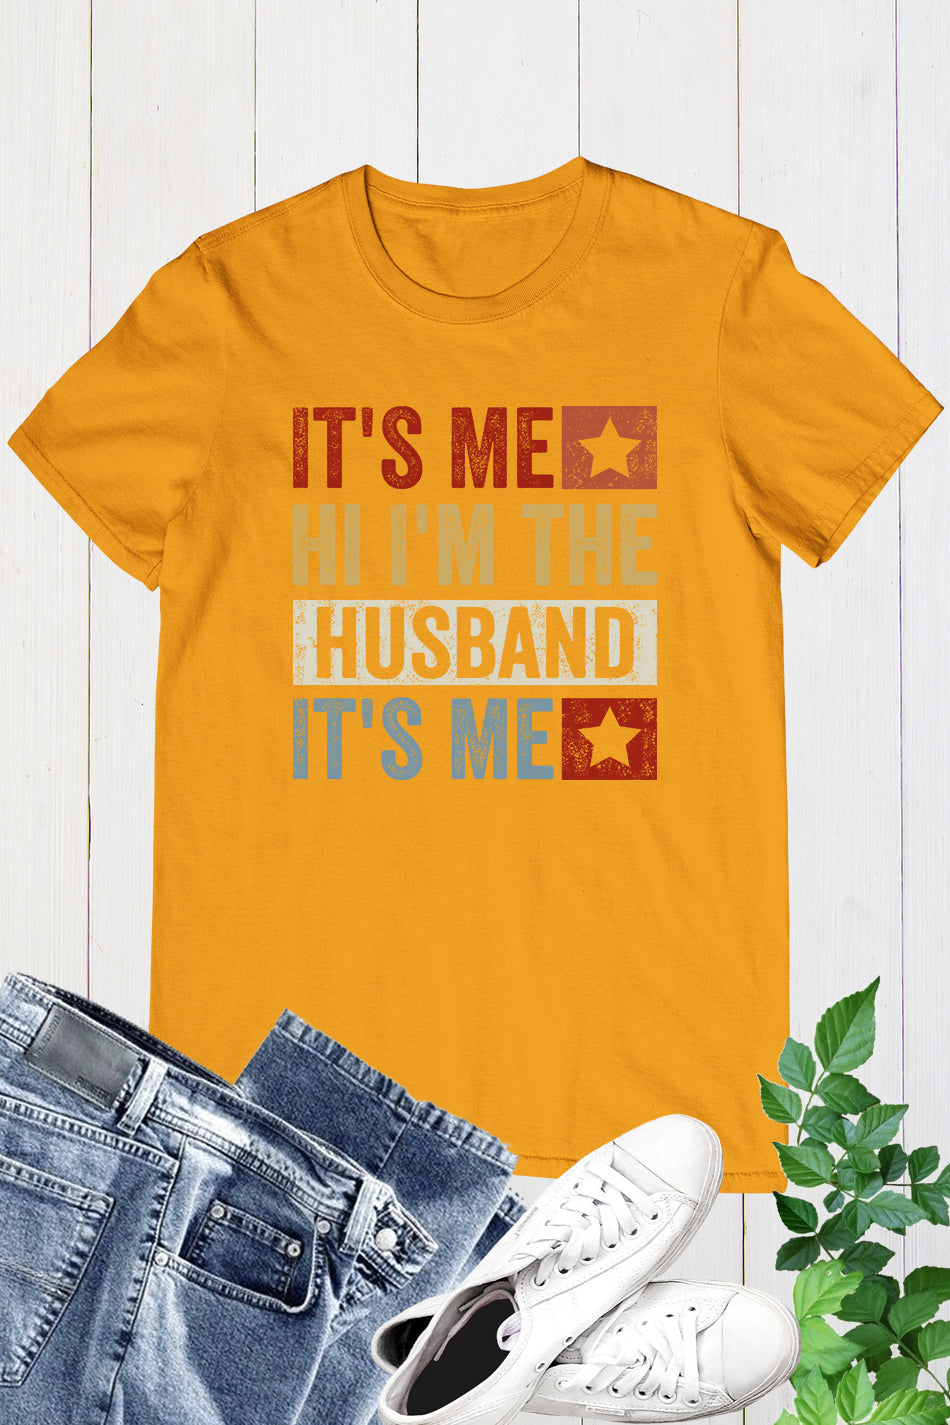 It's Me hi I'm The Husband It's Me Shirt